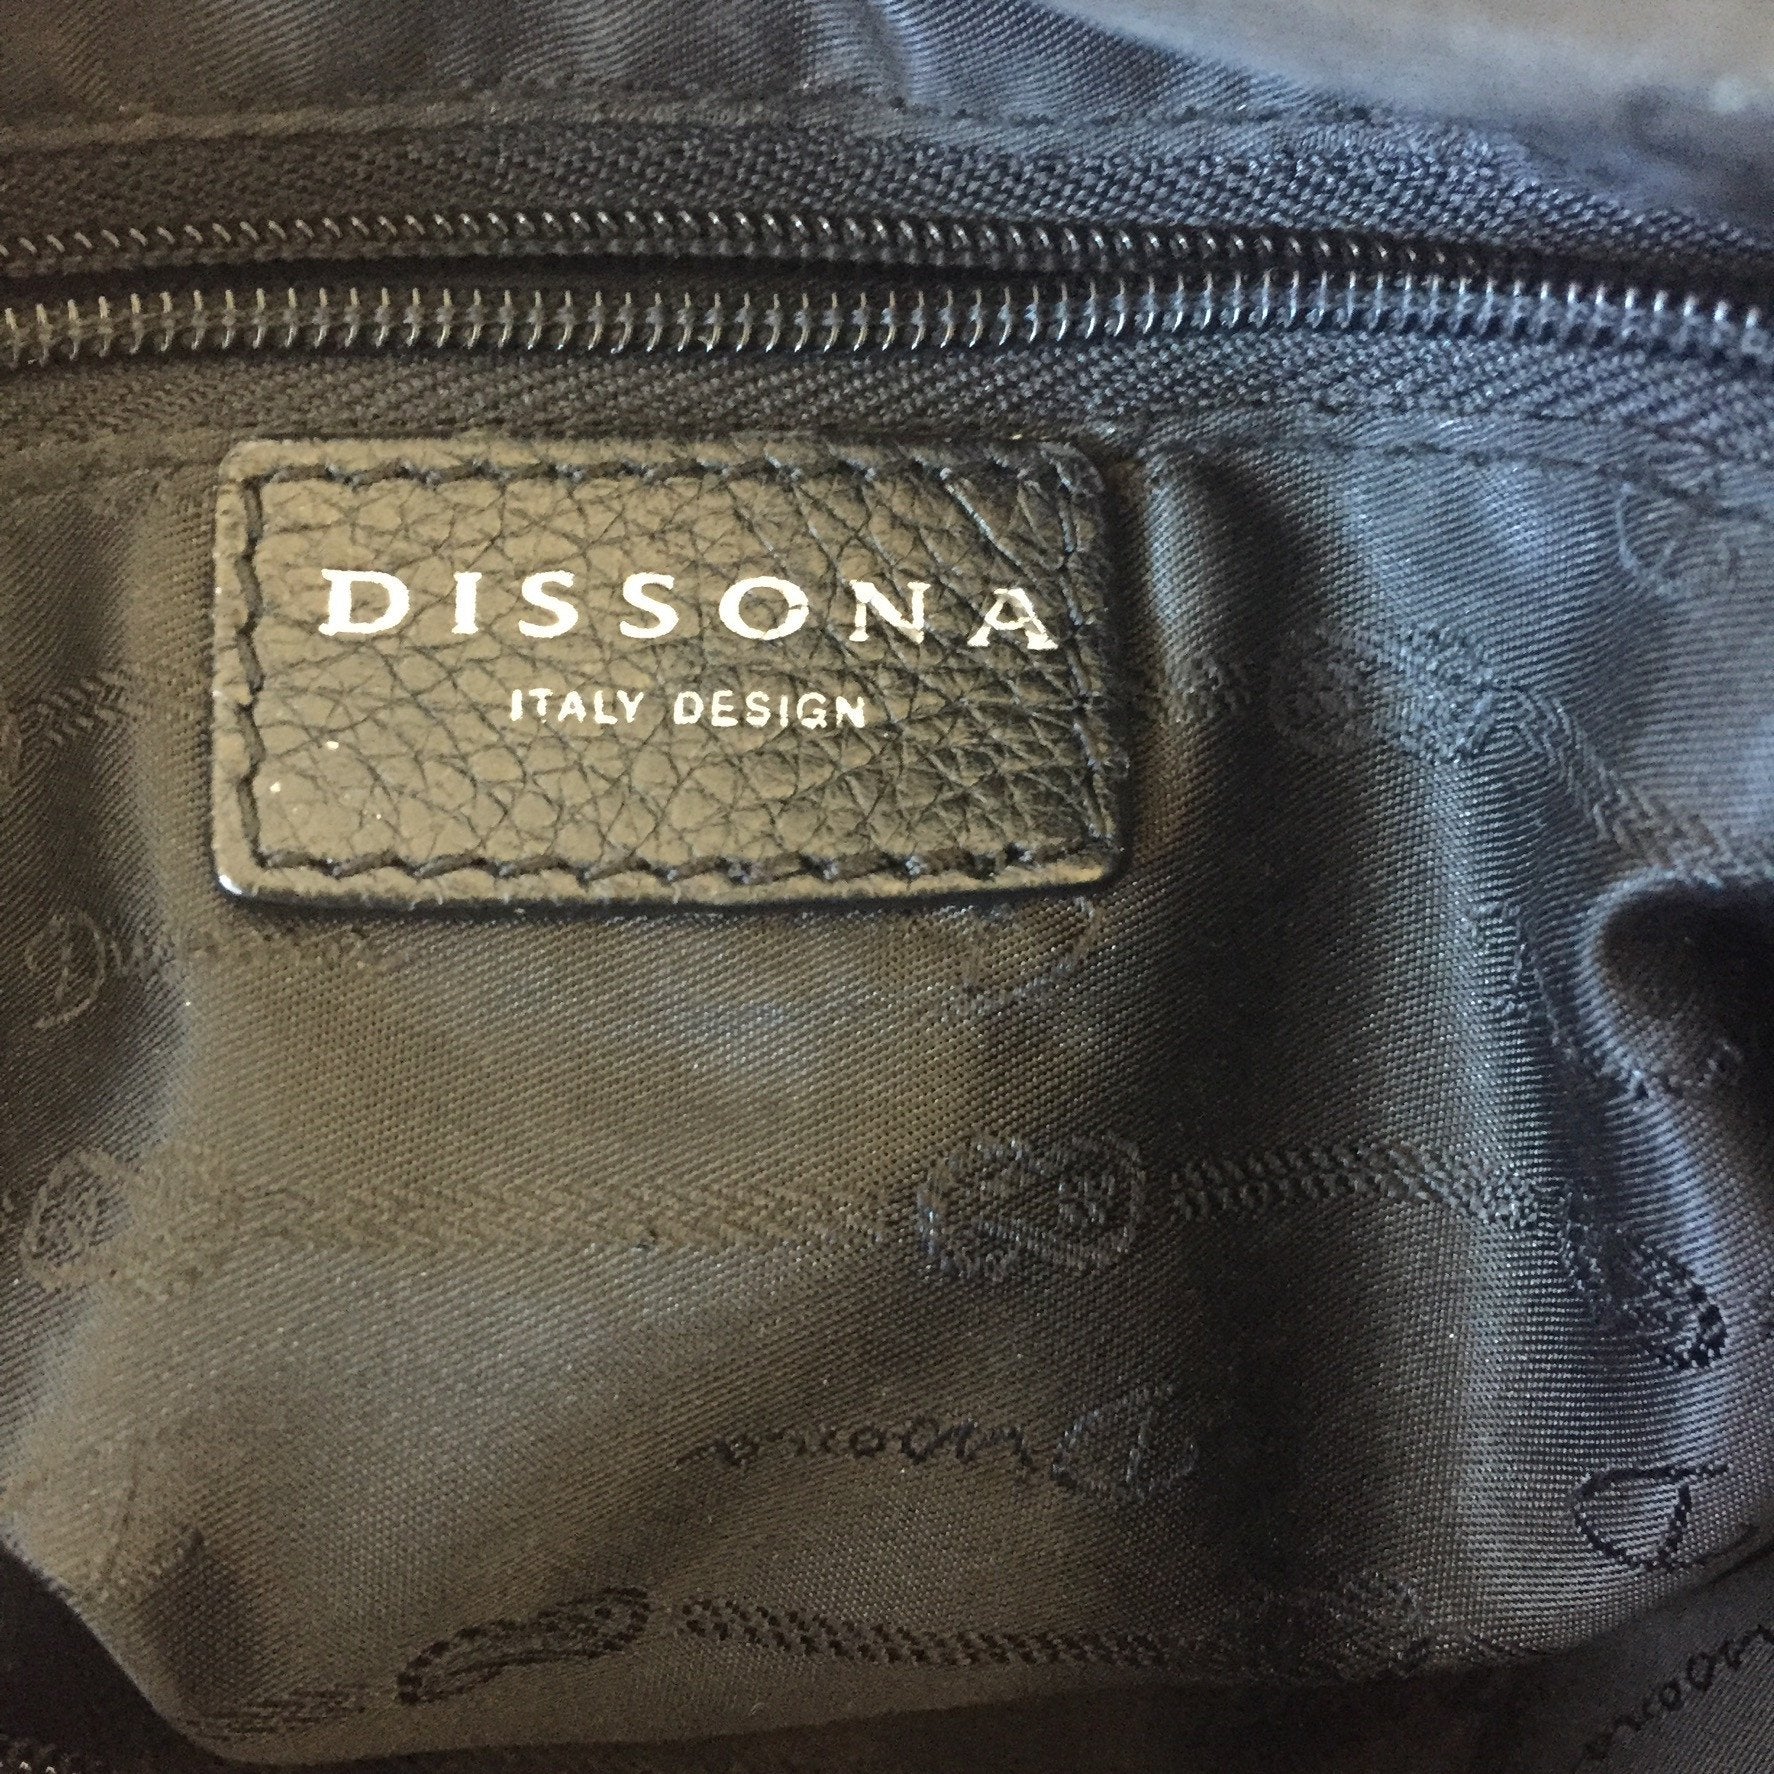 Dissona, Bags